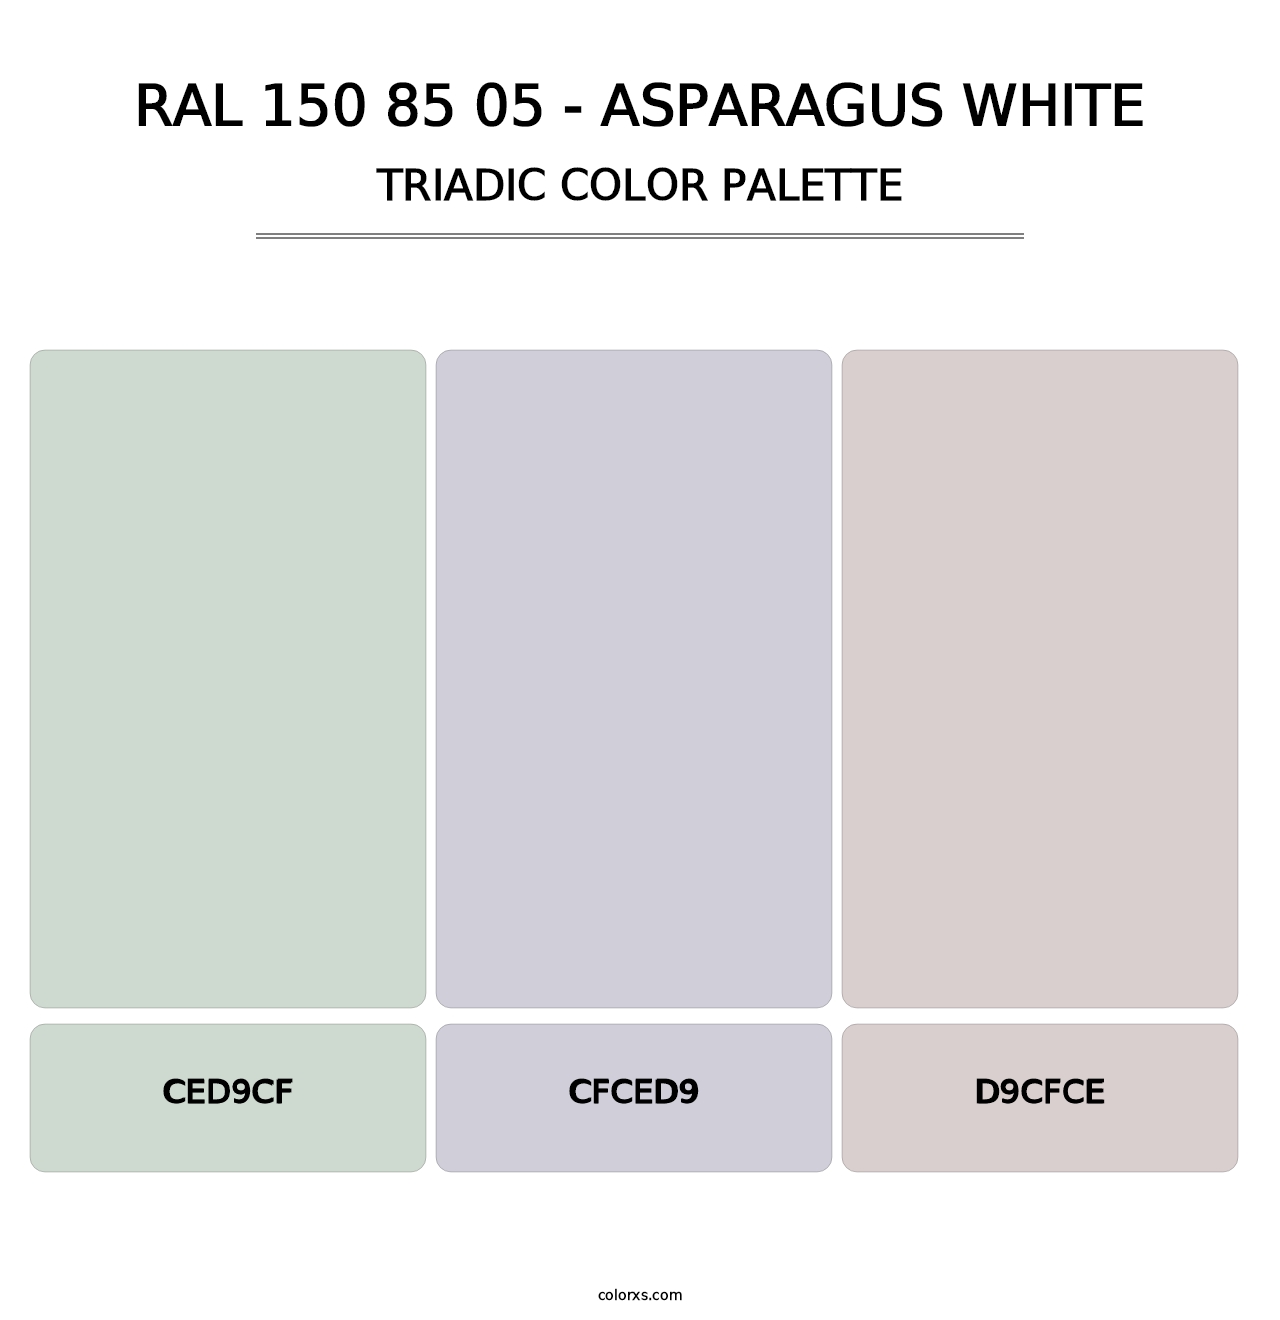 RAL 150 85 05 - Asparagus White - Triadic Color Palette